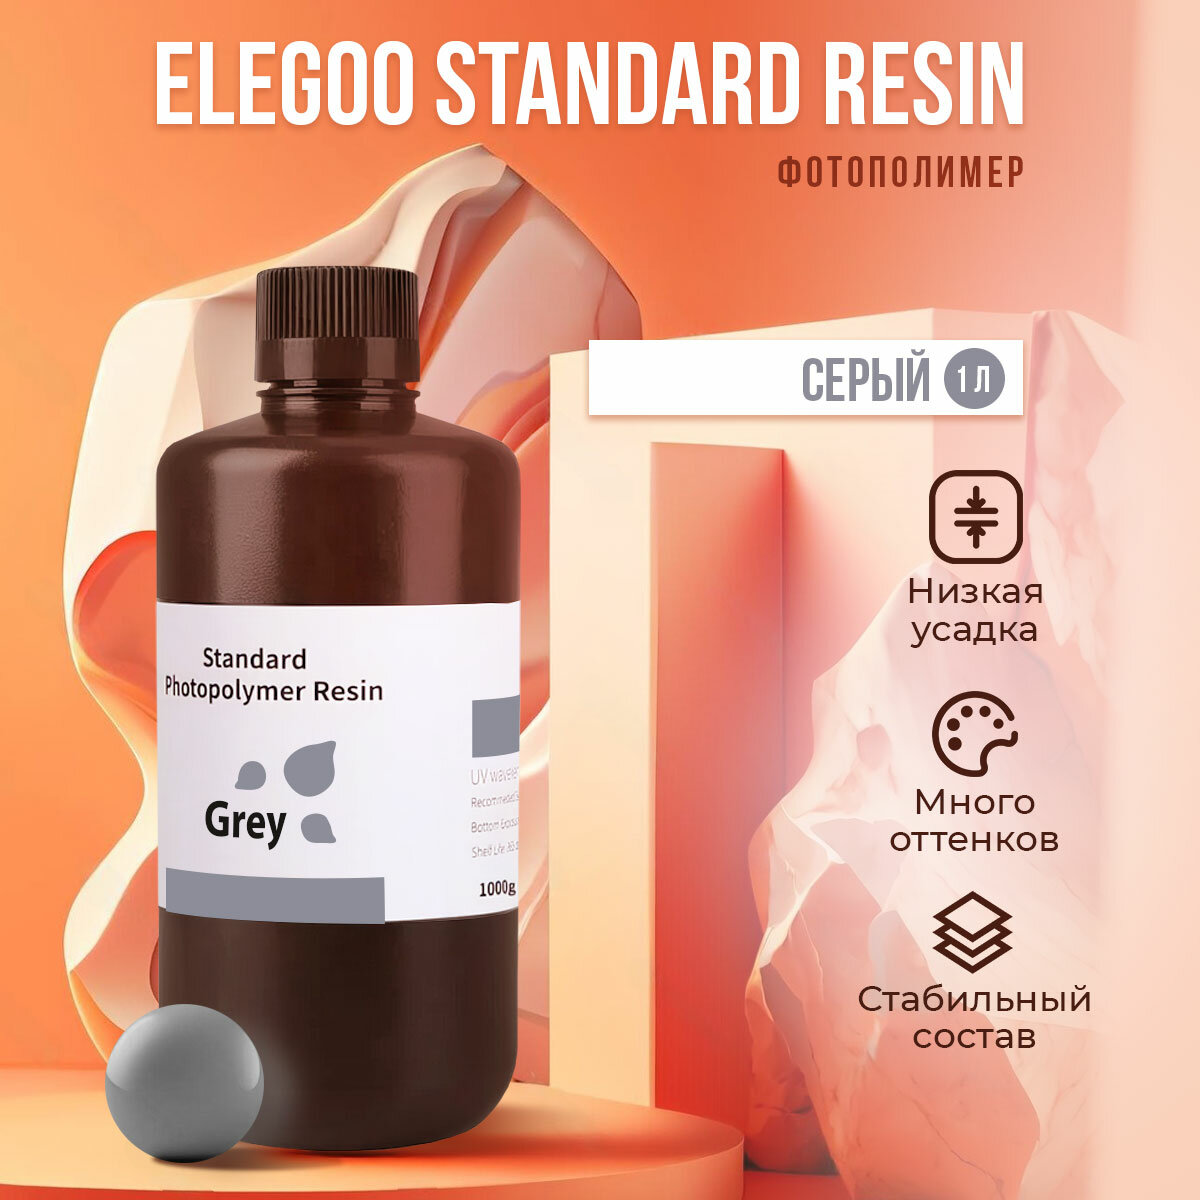 Фотополимер Elegoo Standard Resin Серый, 0.5 л